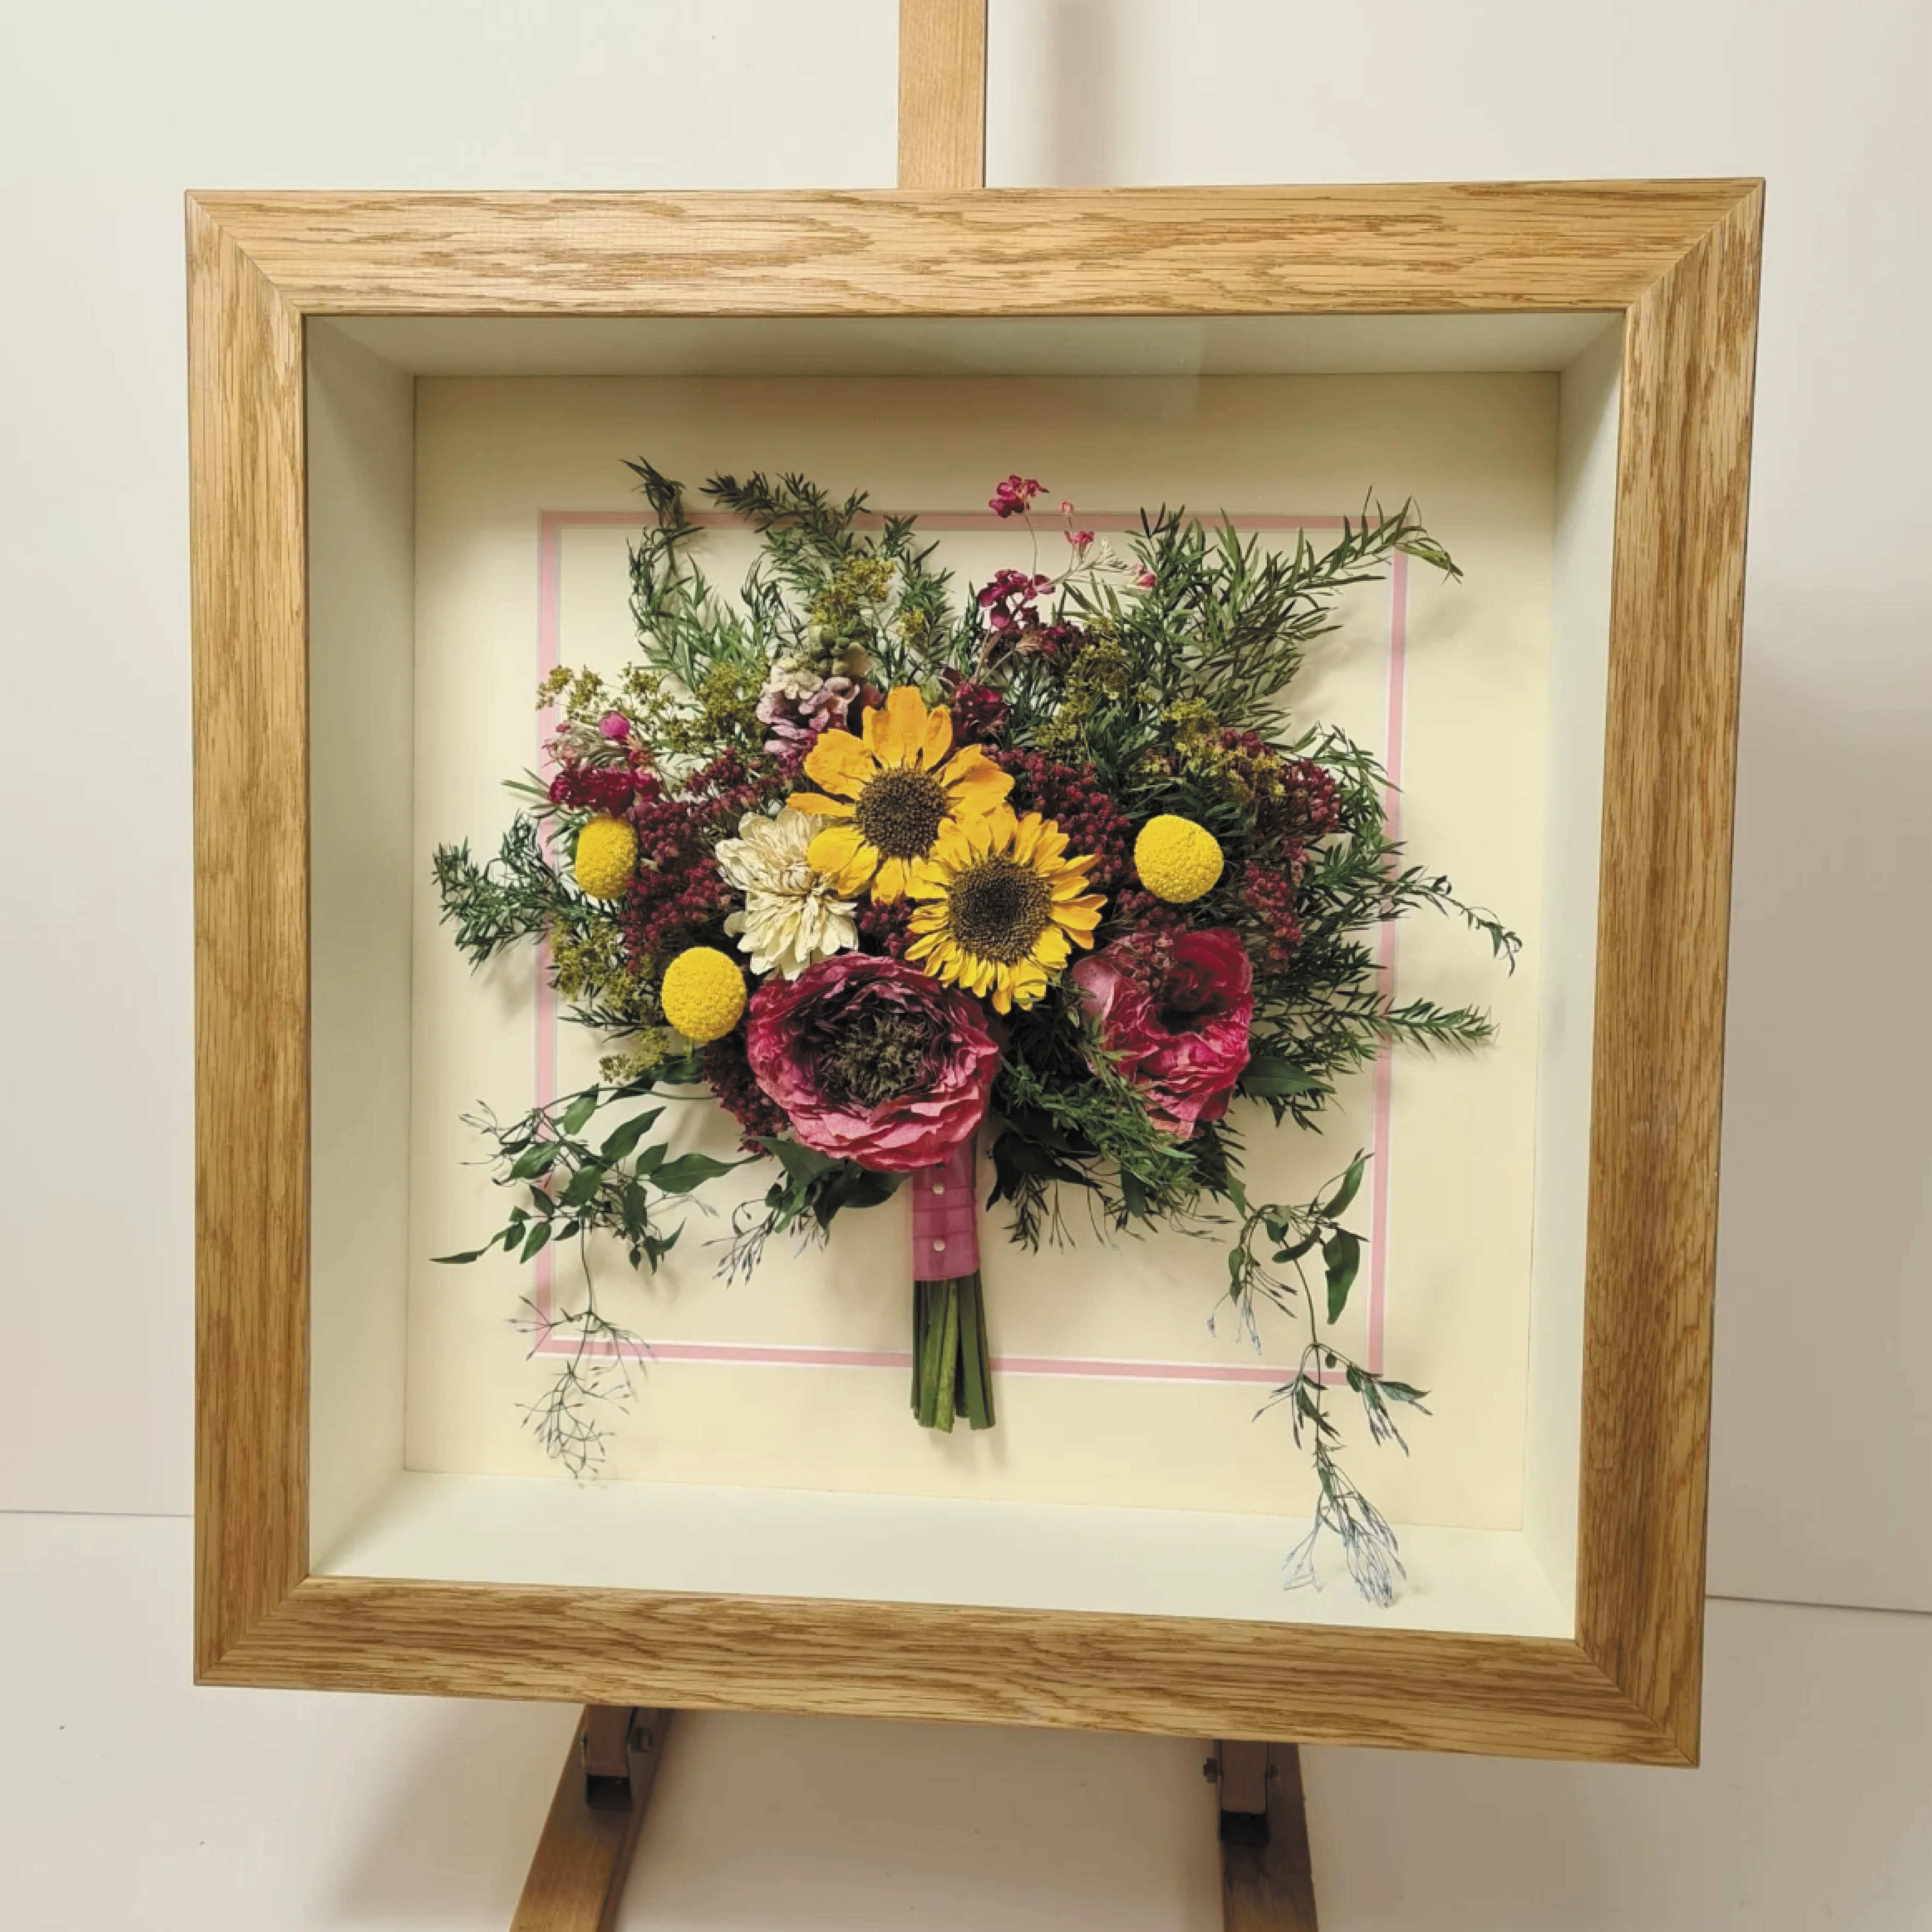 3D Flower Preservation preserving wedding bouquets